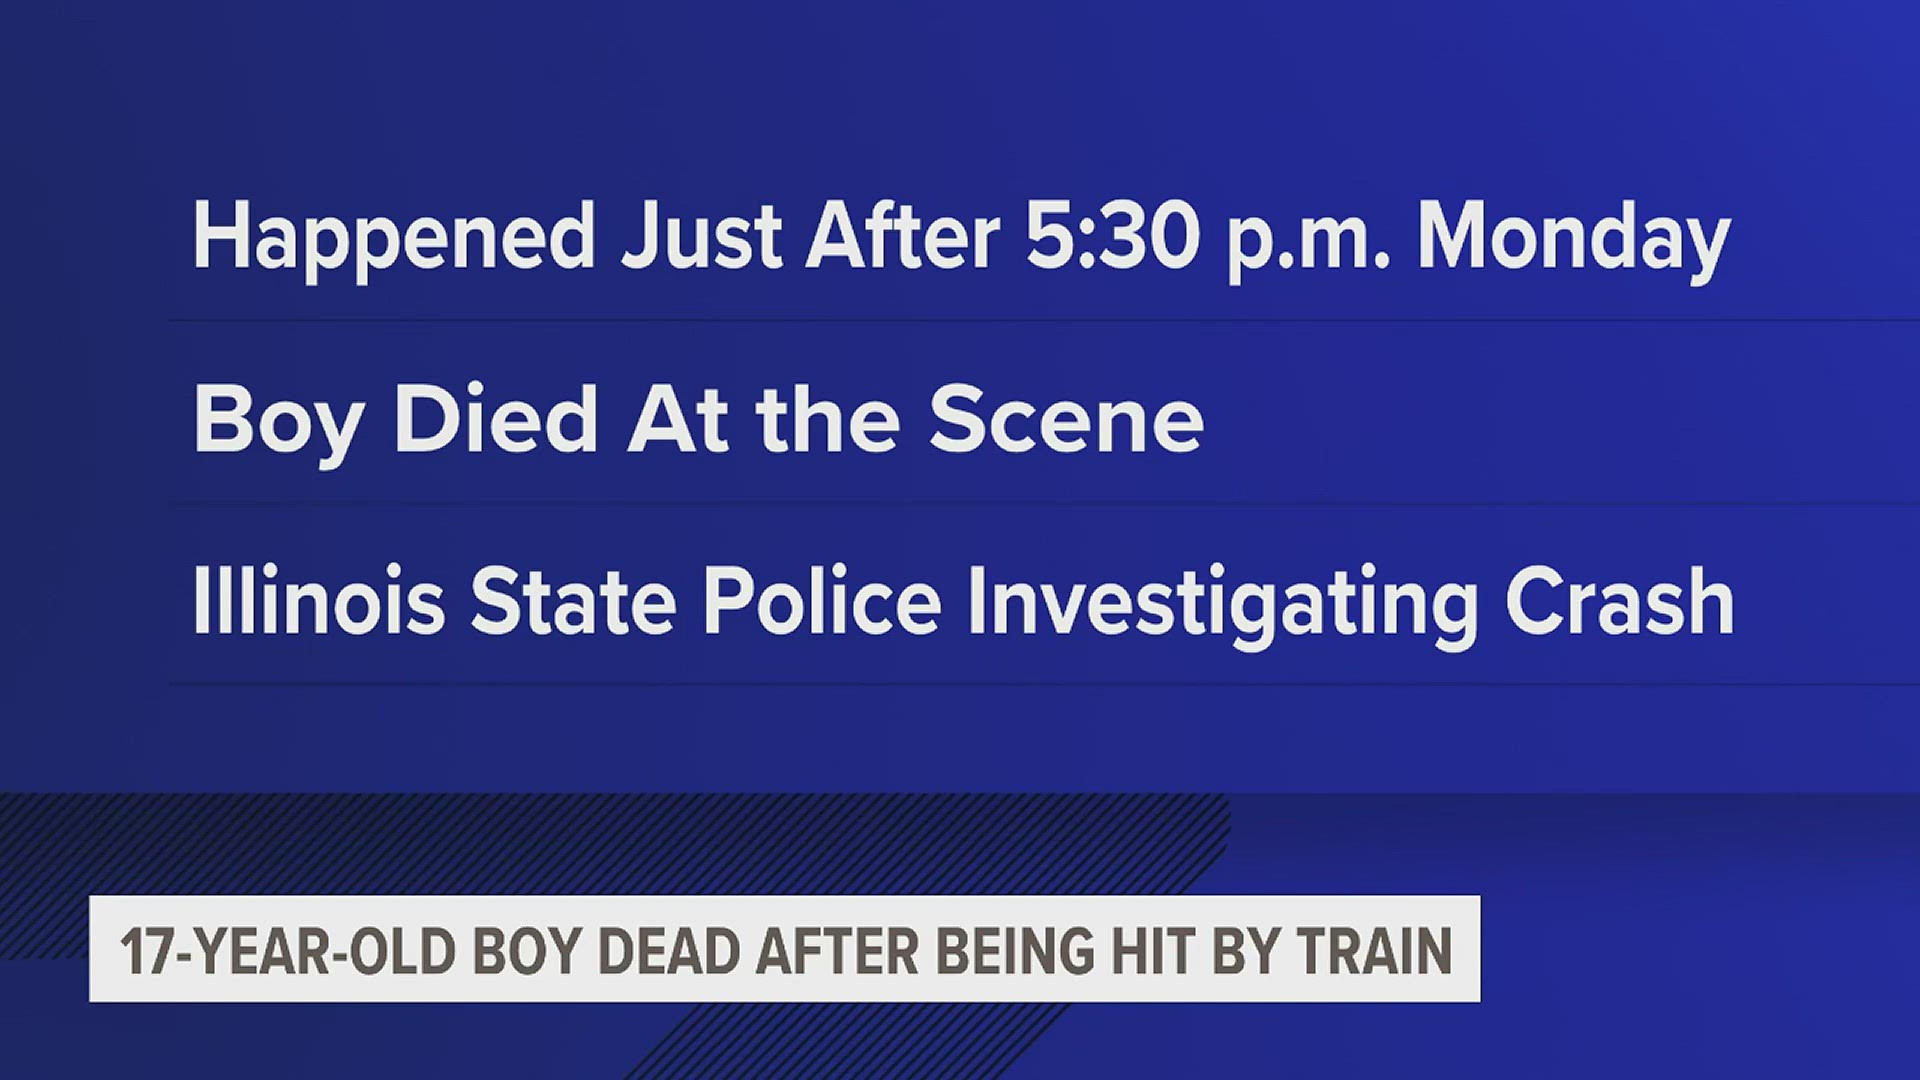 Illinois State Police are investigating the crash.